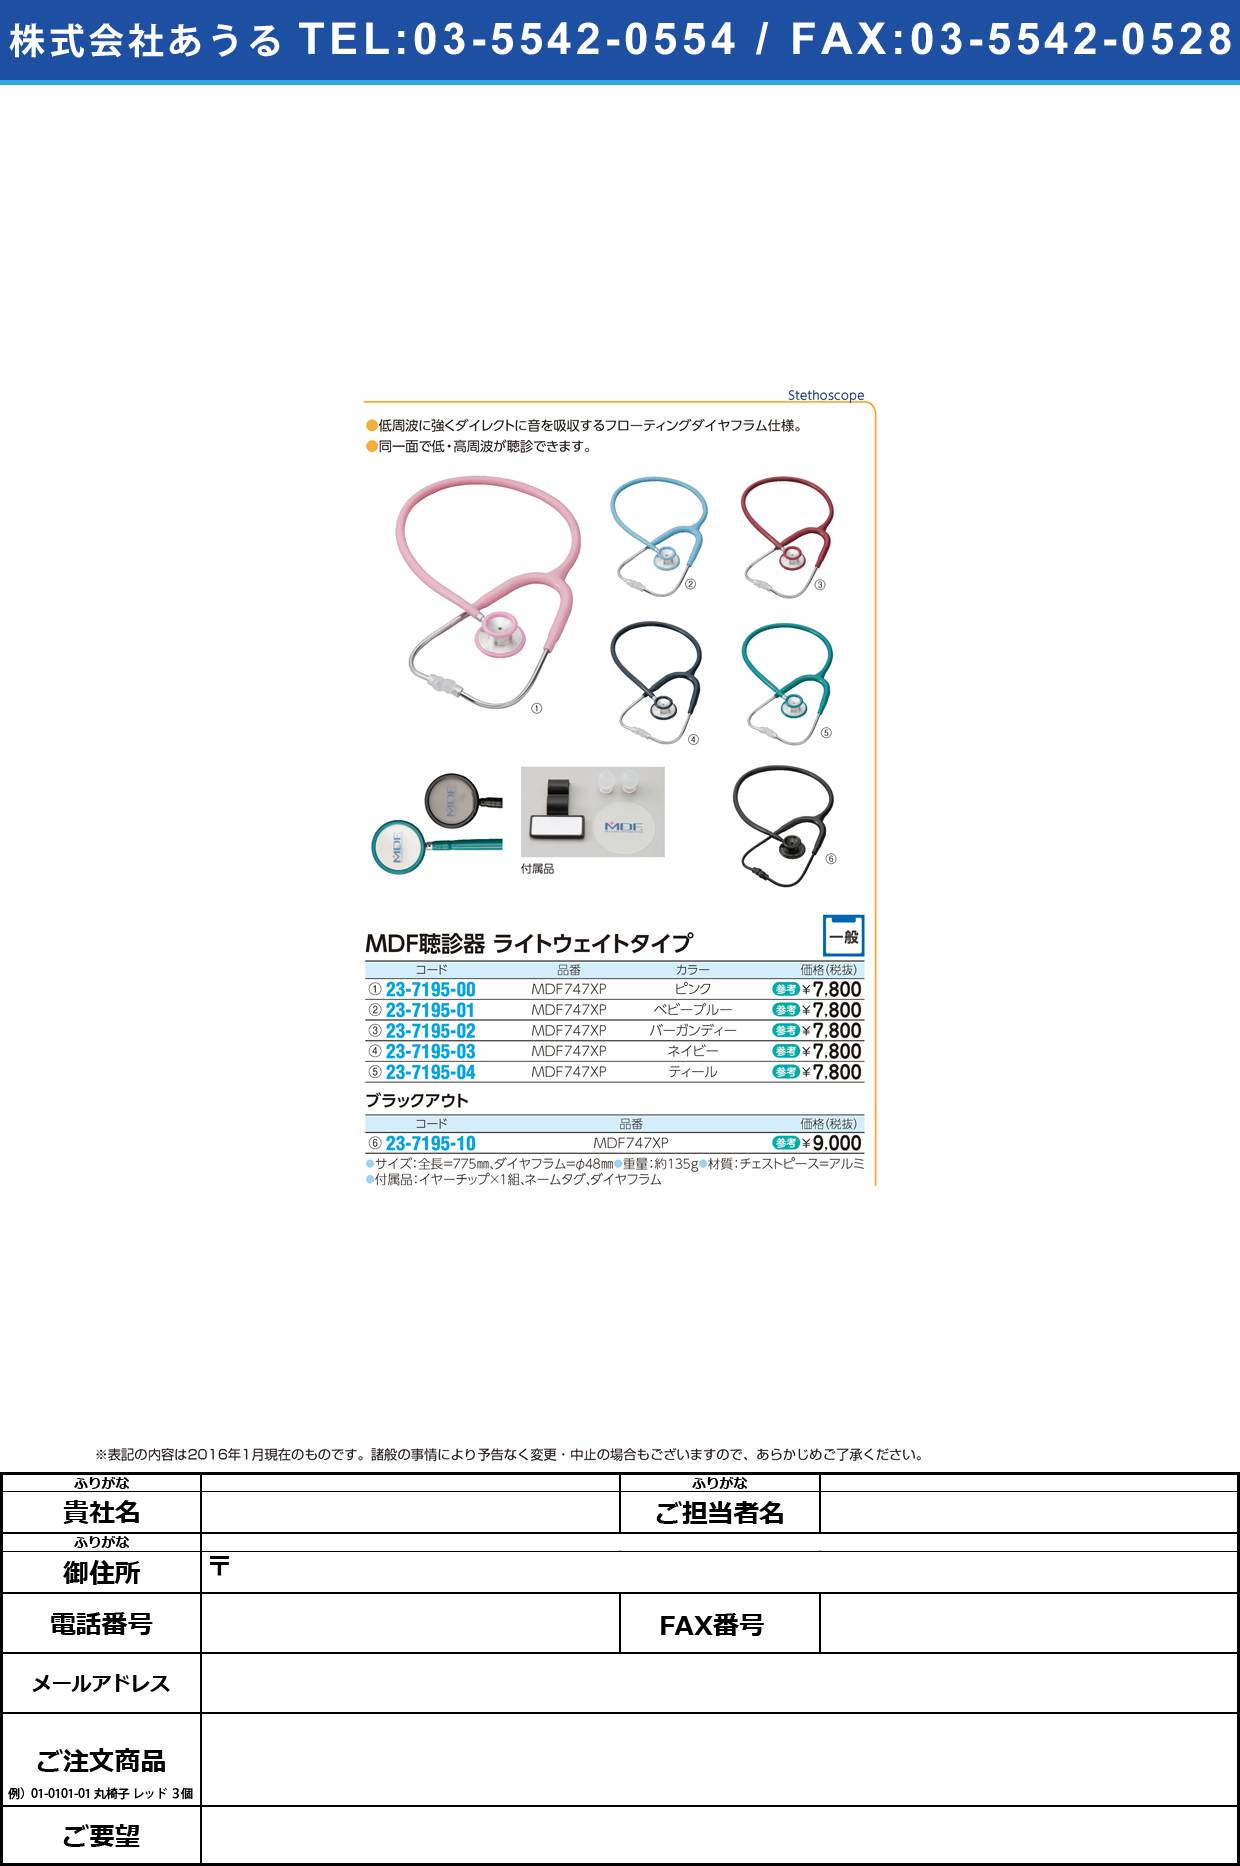 ＭＤＦ聴診器ライトウェイトタイプ MDFﾁｮｳｼﾝｷﾗｲﾄｳｪｲﾄﾀｲﾌﾟ MDF747XP(ﾃｨｰﾙ)